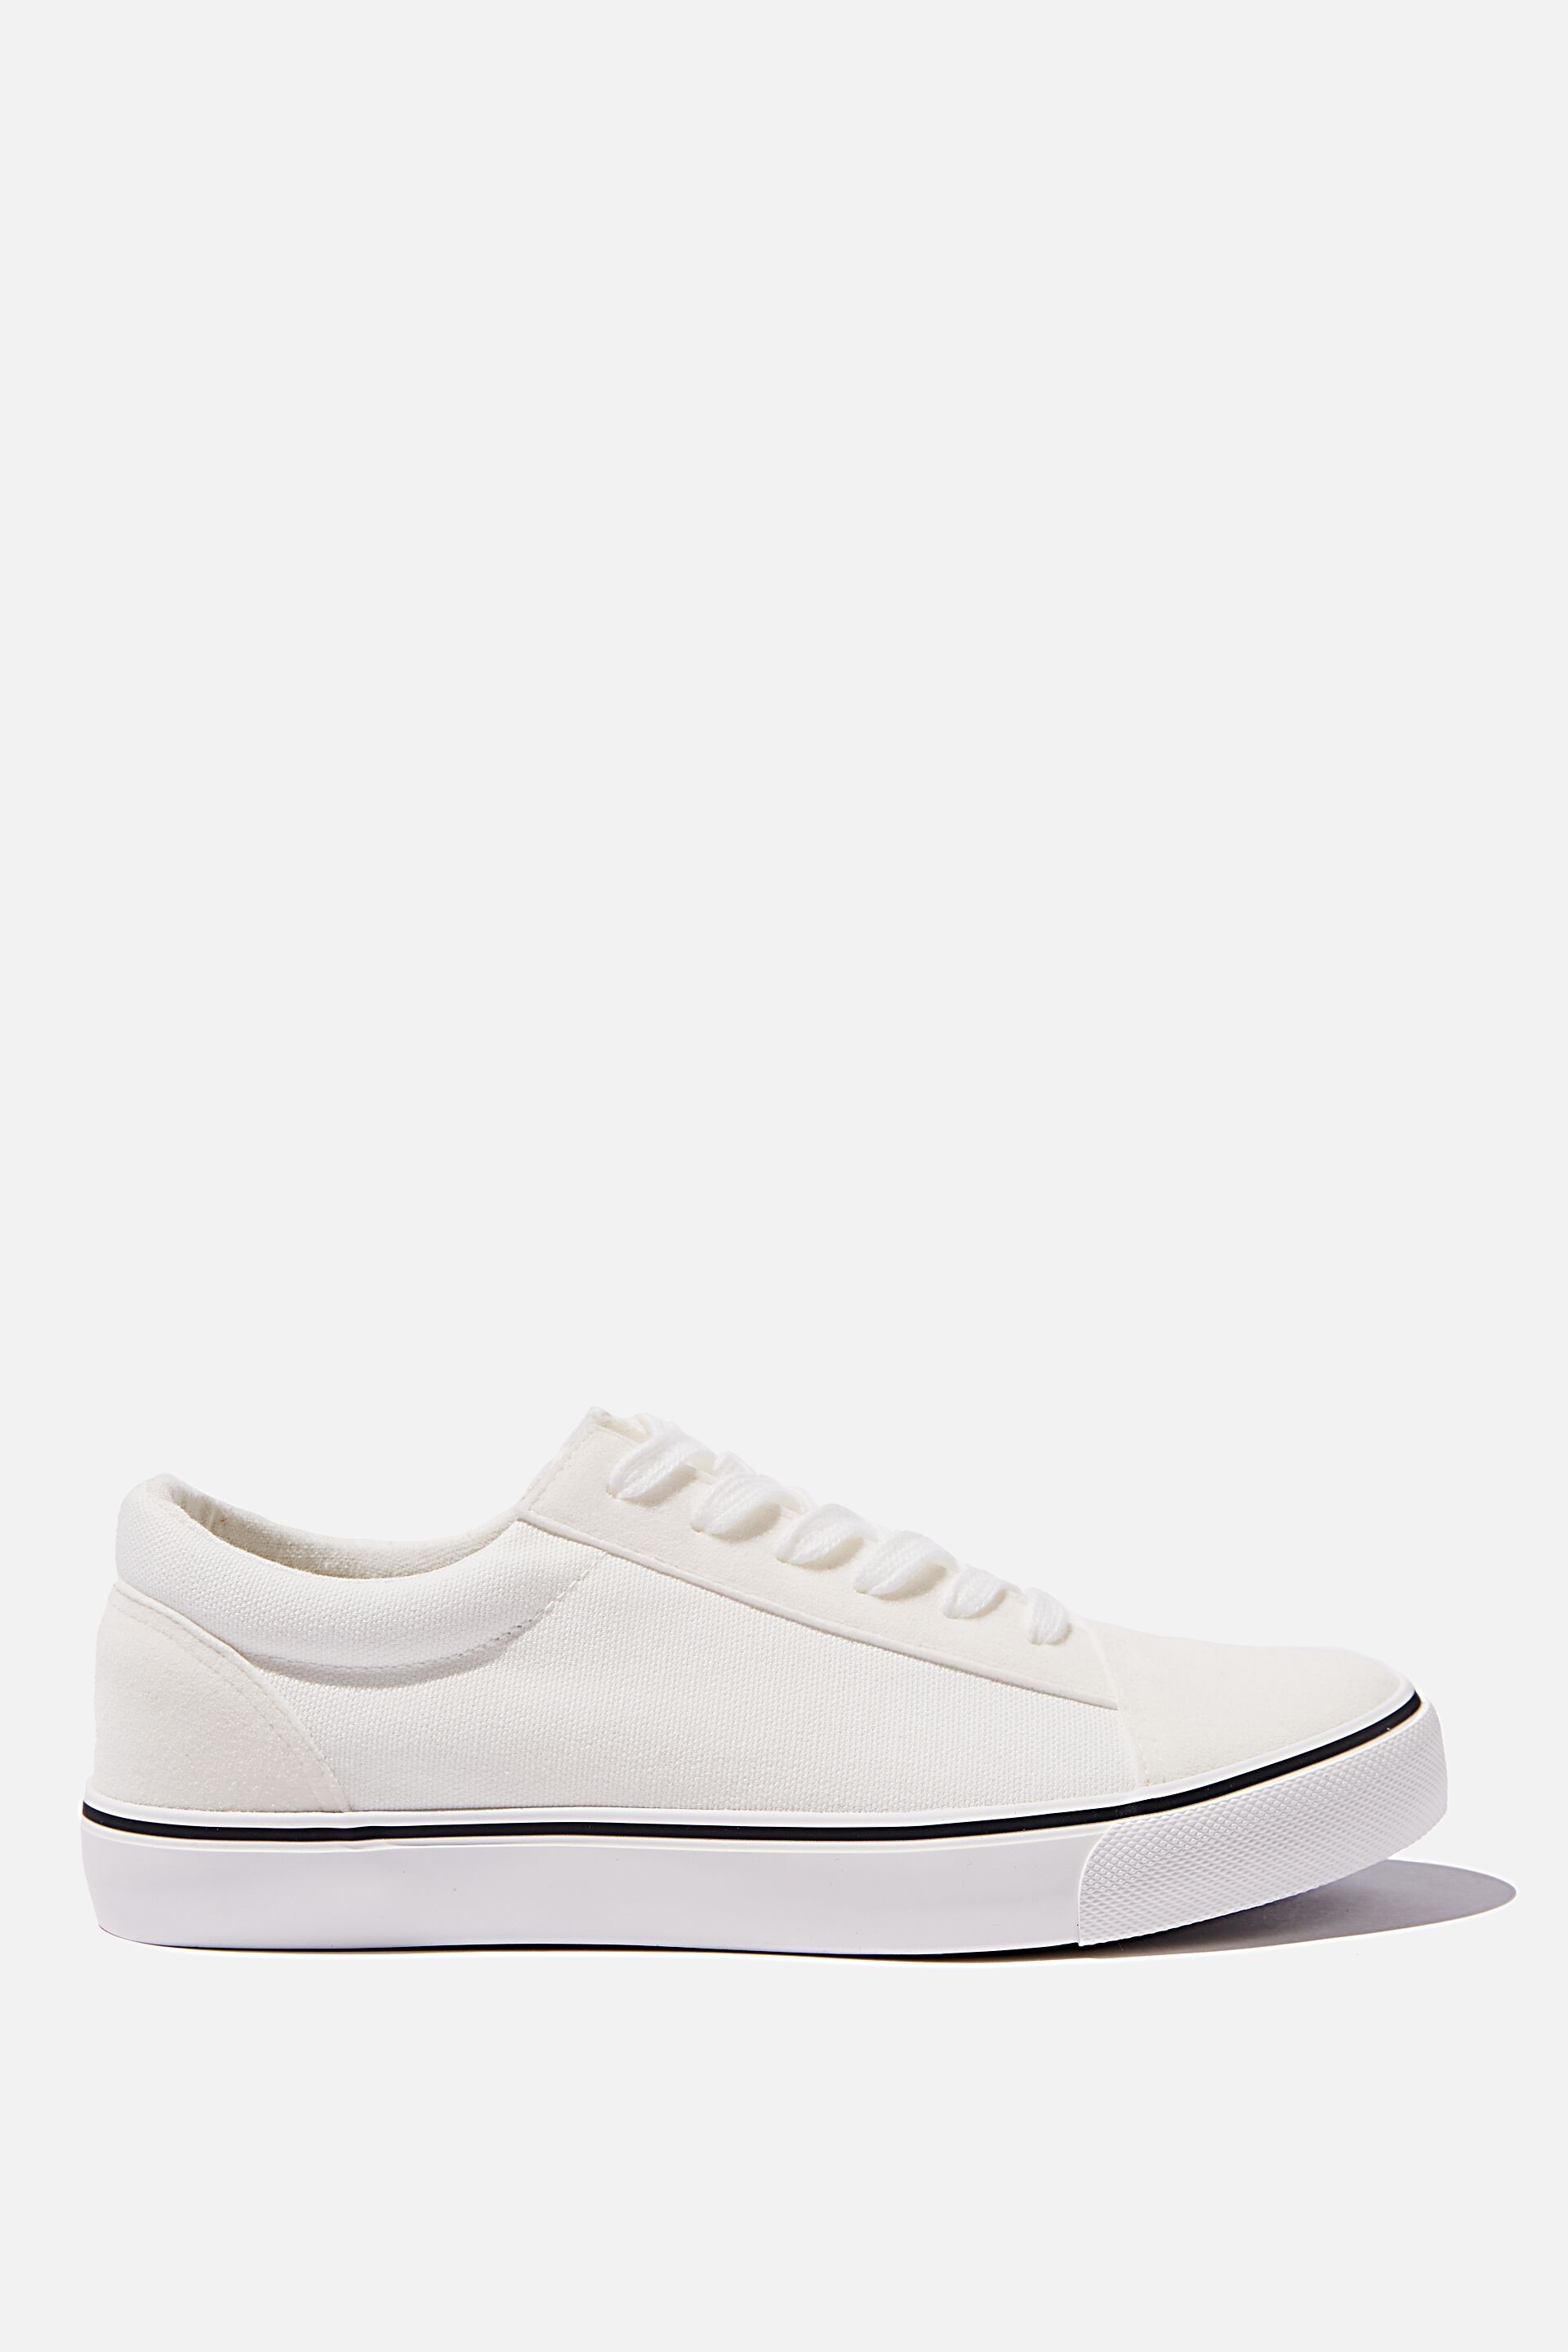 cotton on white sneakers